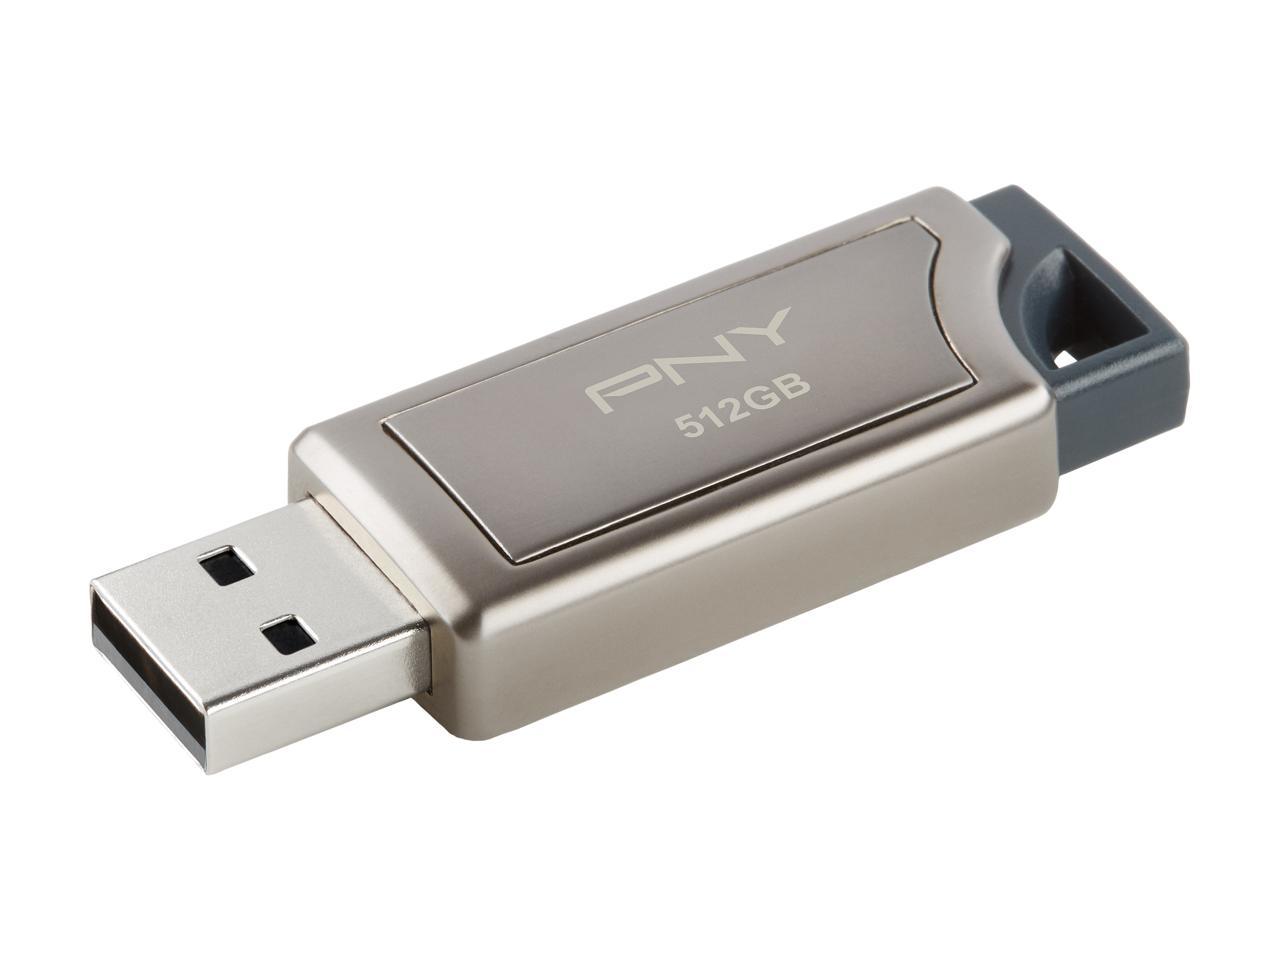 PNY 512GB Pro Elite USB 3.0 Flash Drive, Speed Up to 400MB/s (P-FD512PRO-GE)